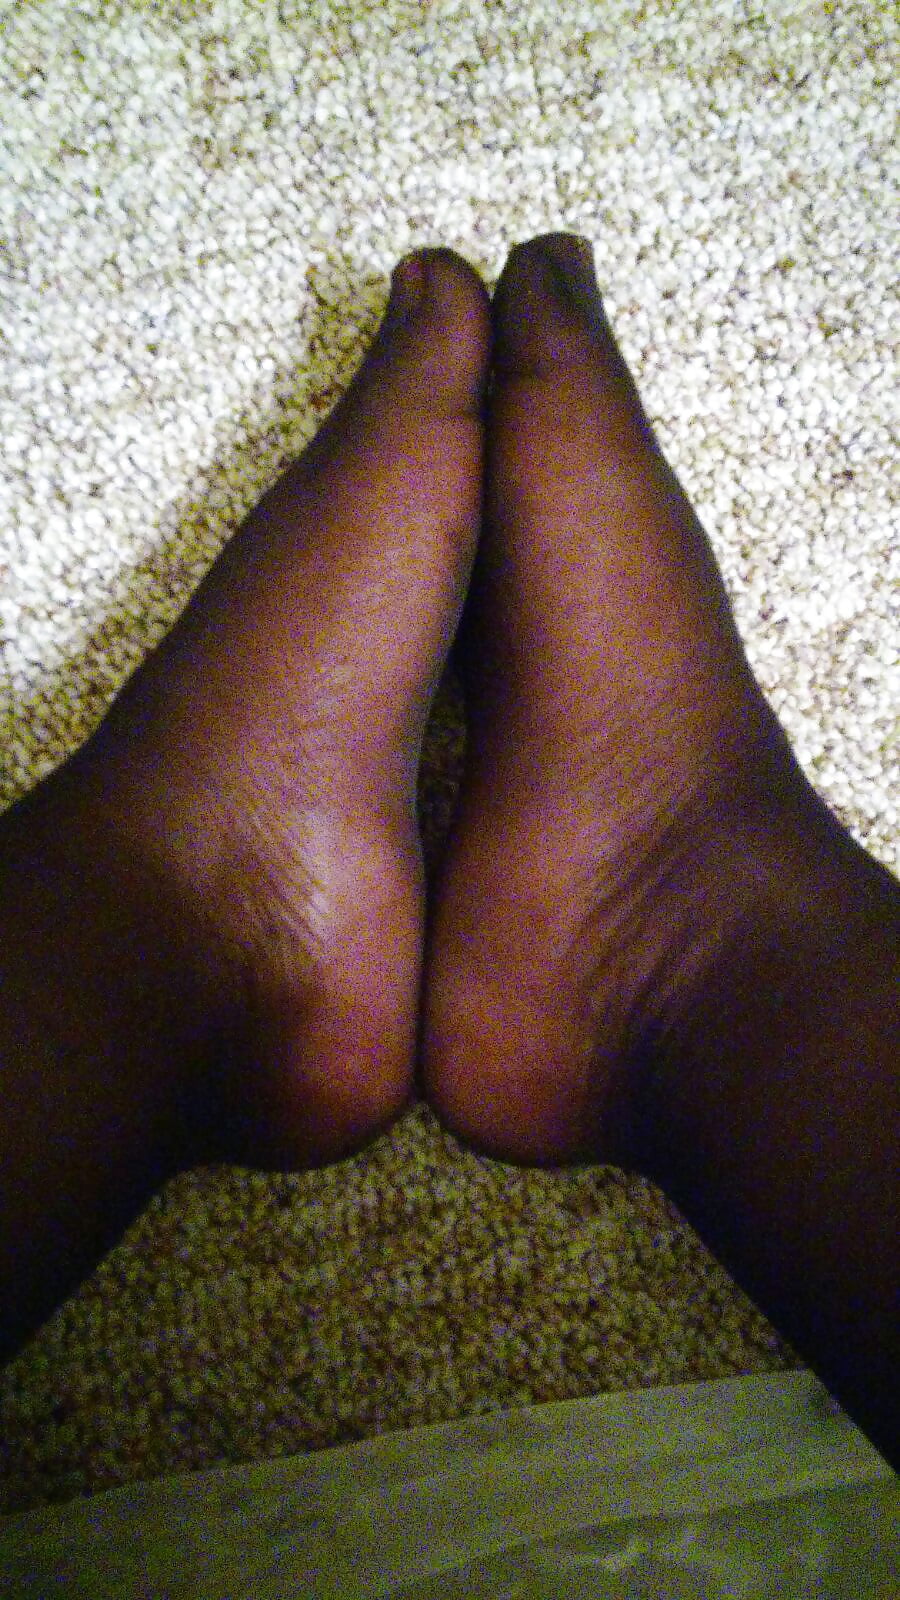 BBW ebony feet in pantyhose pict gal